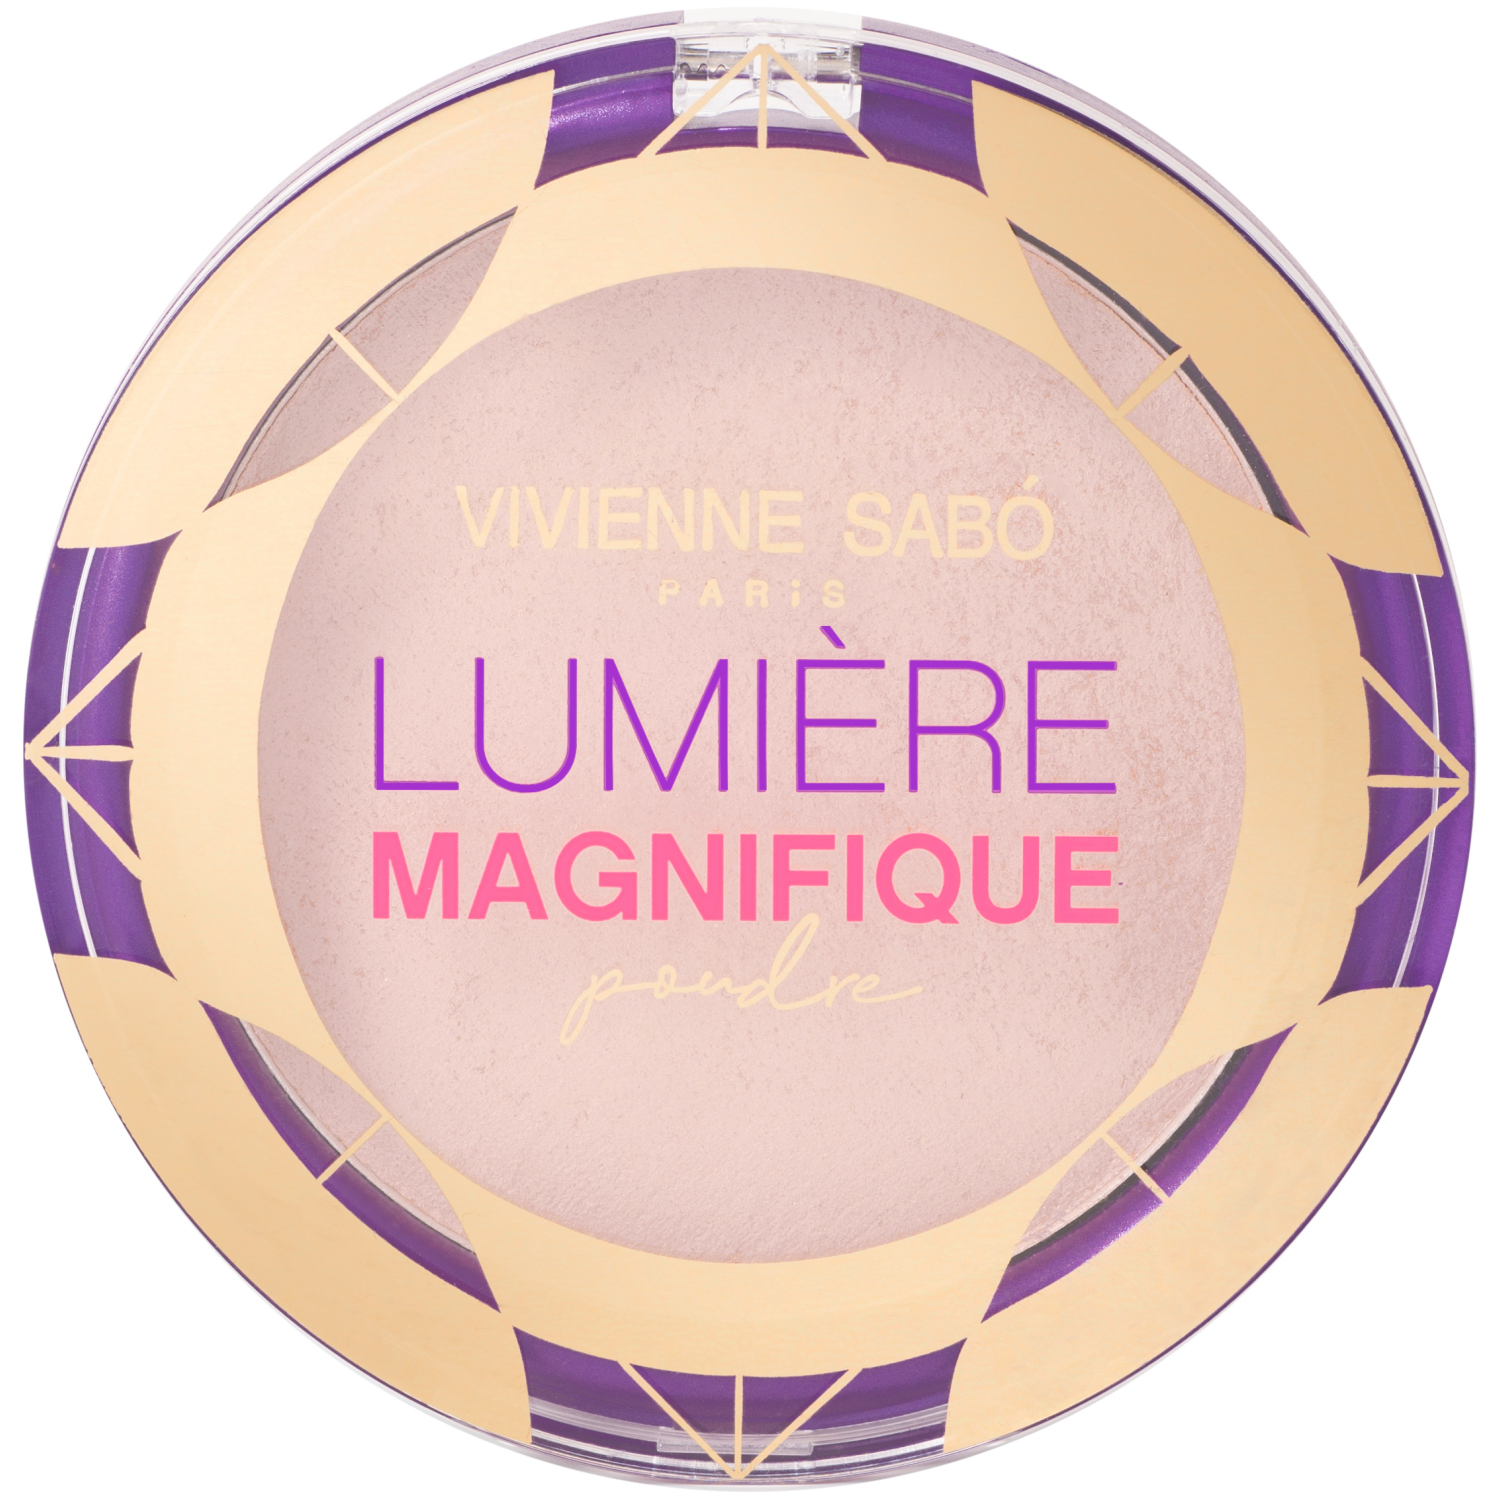 Пудра Vivienne Sabo Lumiere Magnifique, сияющая, бархатистая текстура, эффект мягкого фокуса, тон 02, бежевый, 6гр.